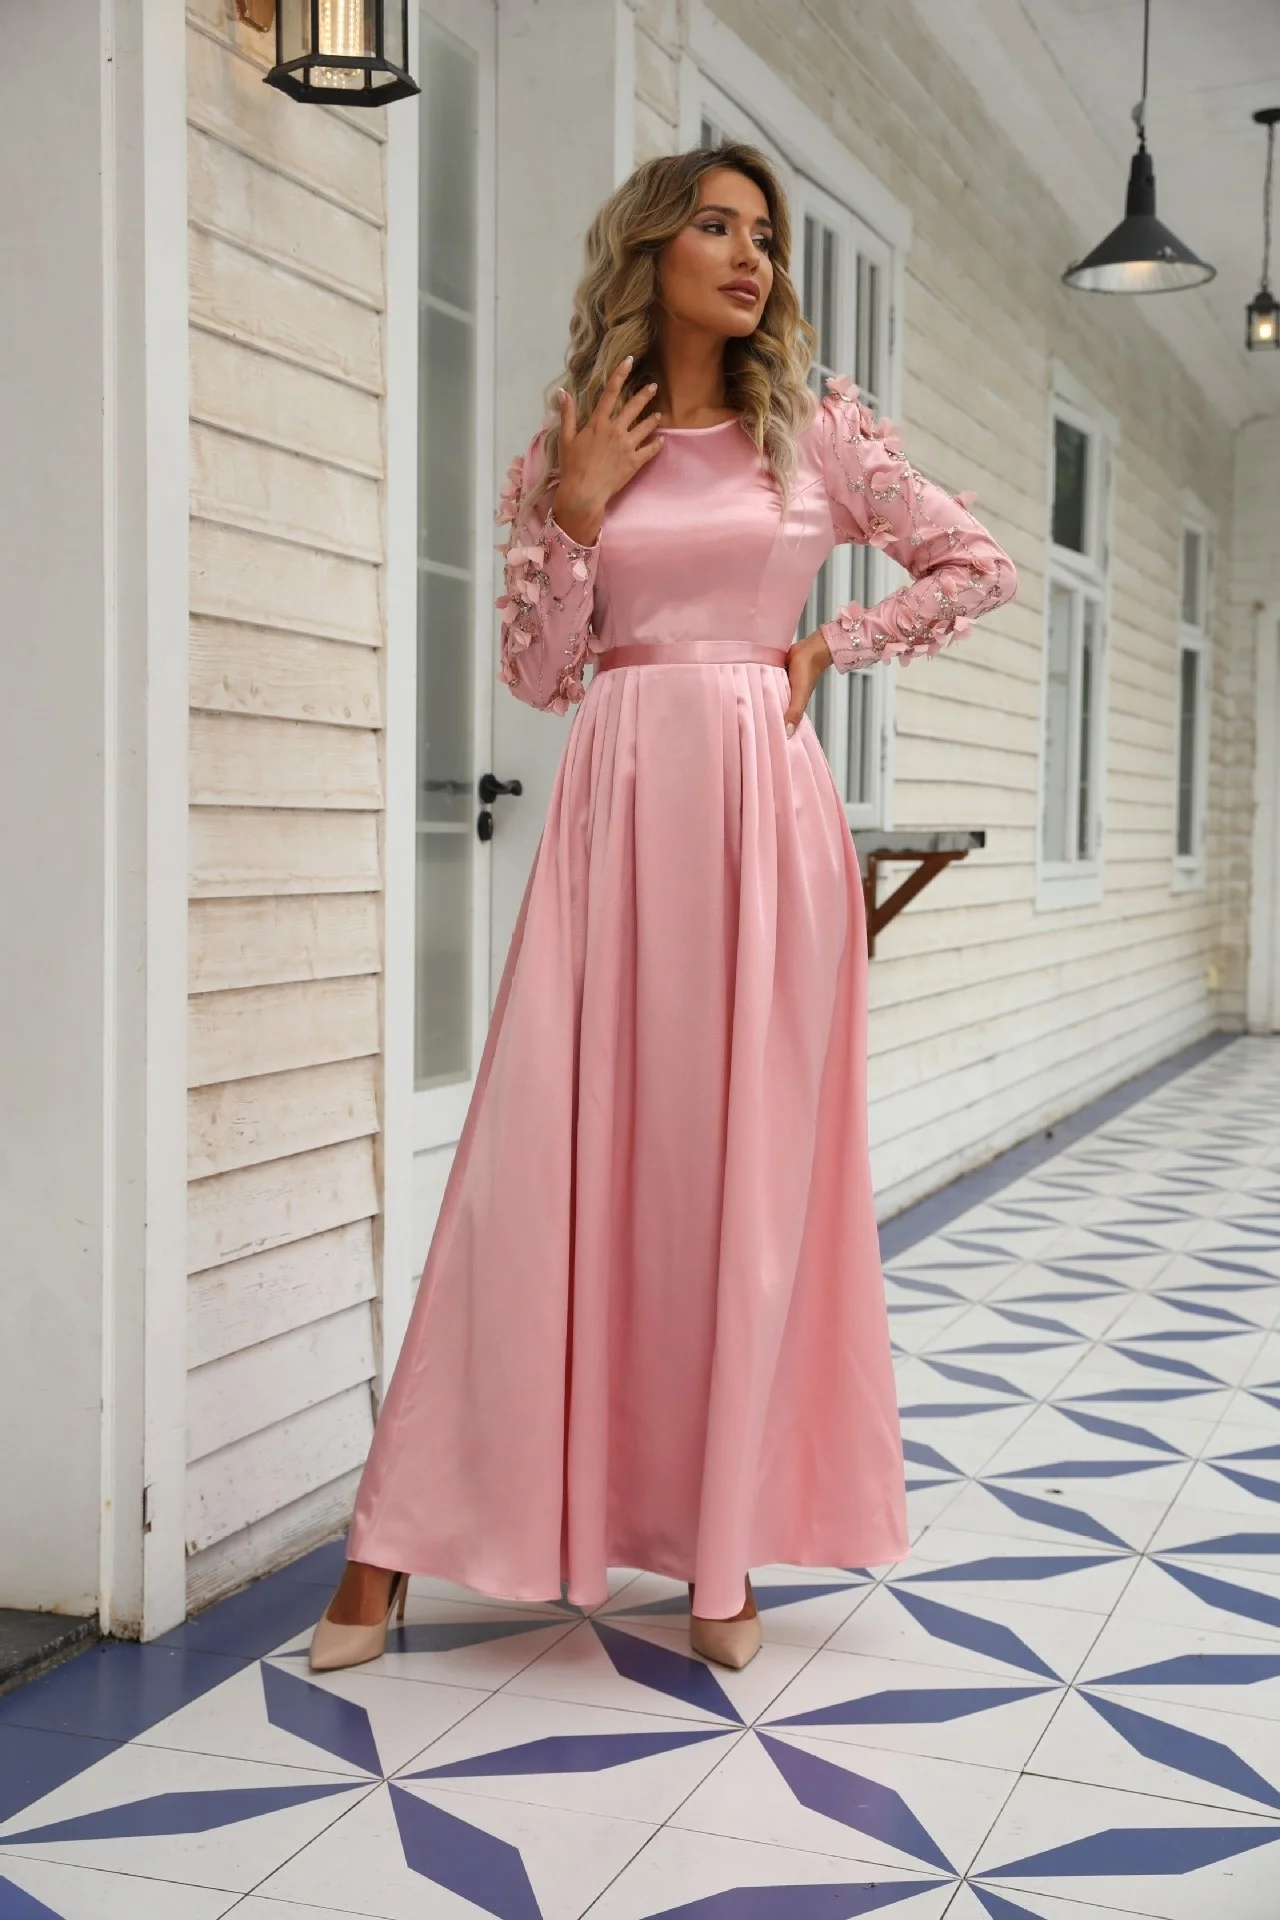 Abaya Vestido Para as Mulheres de Cristal cor-de-Rosa de Cetim Bordados 3D, Moda, Mulher de Vestido Elegante Vestido de Noite comprido Kaftan de Vestuário Feminino